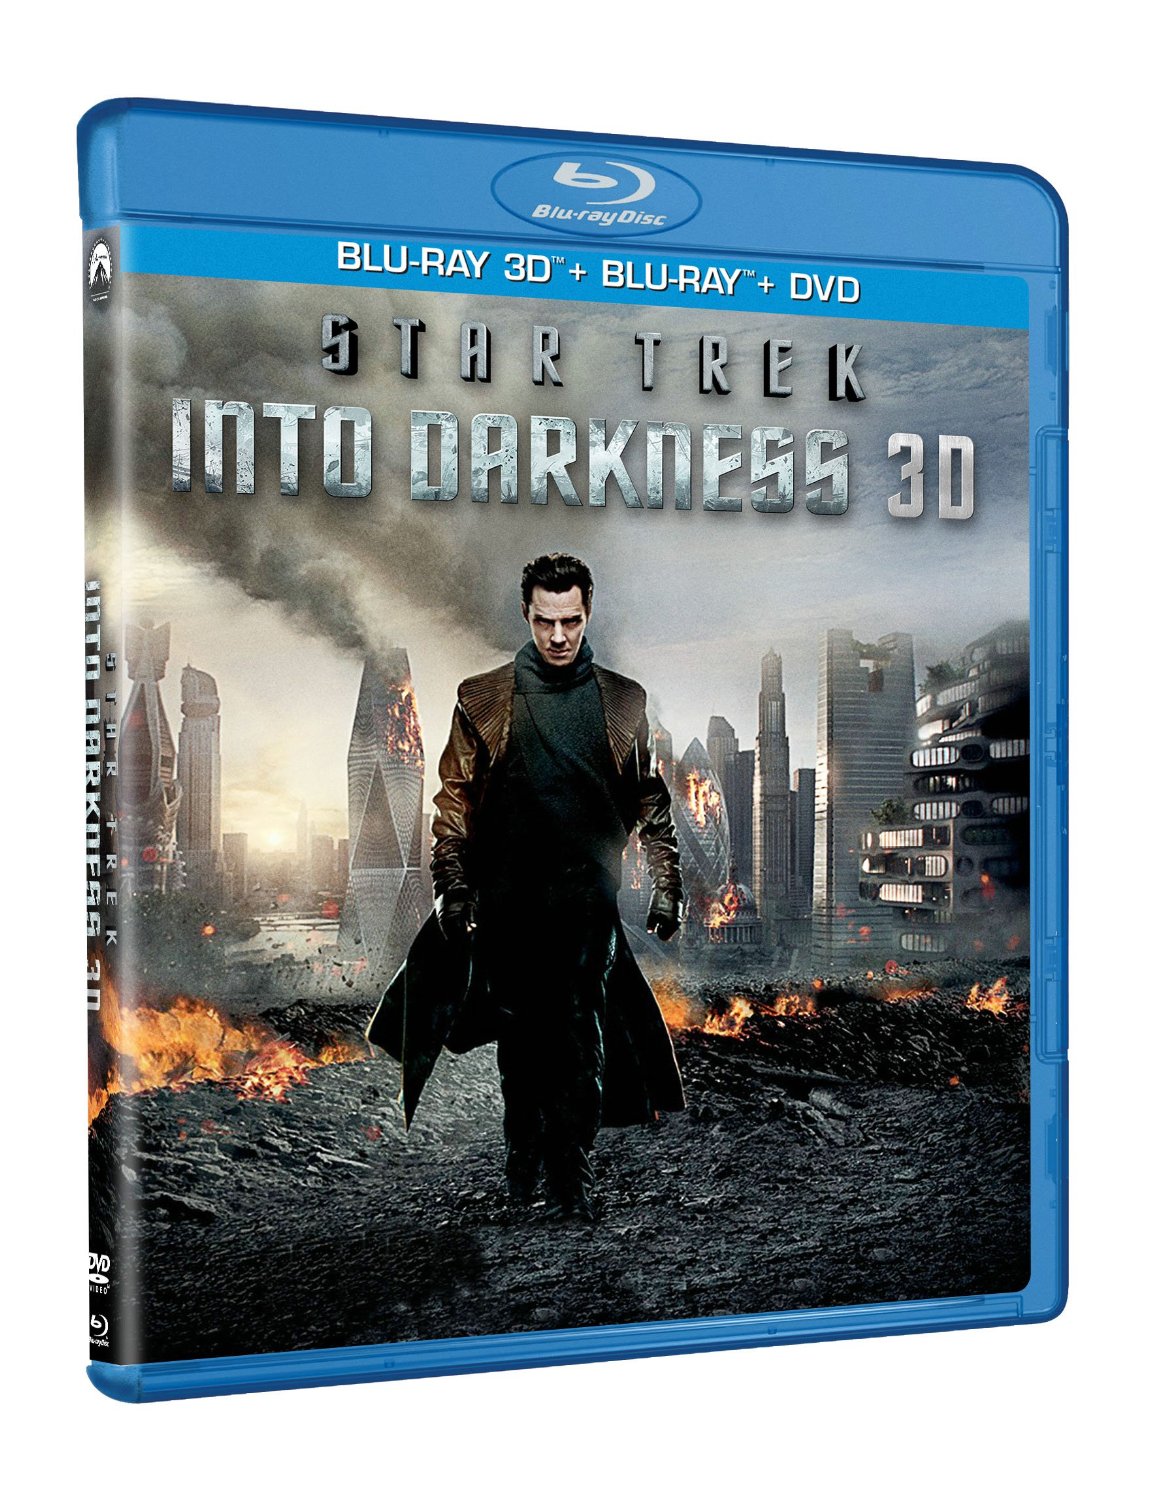 Le DVD et Blu-ray de Star Trek Into Darkness